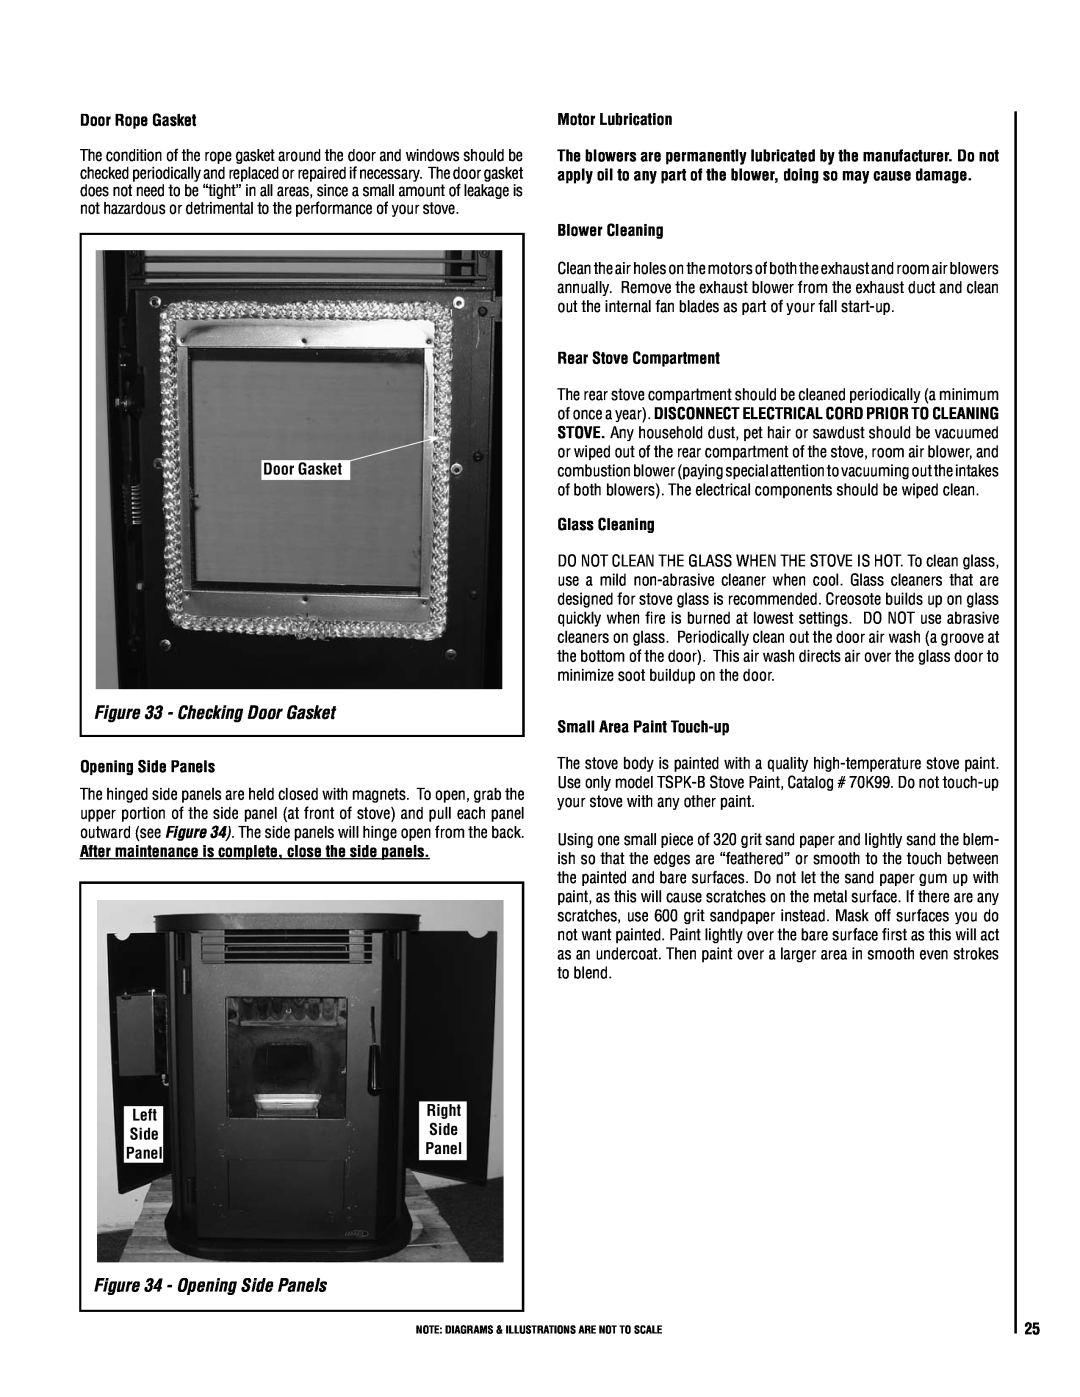 Lennox Hearth 32FS Checking Door Gasket, Opening Side Panels, Door Rope Gasket, Motor Lubrication, Blower Cleaning 